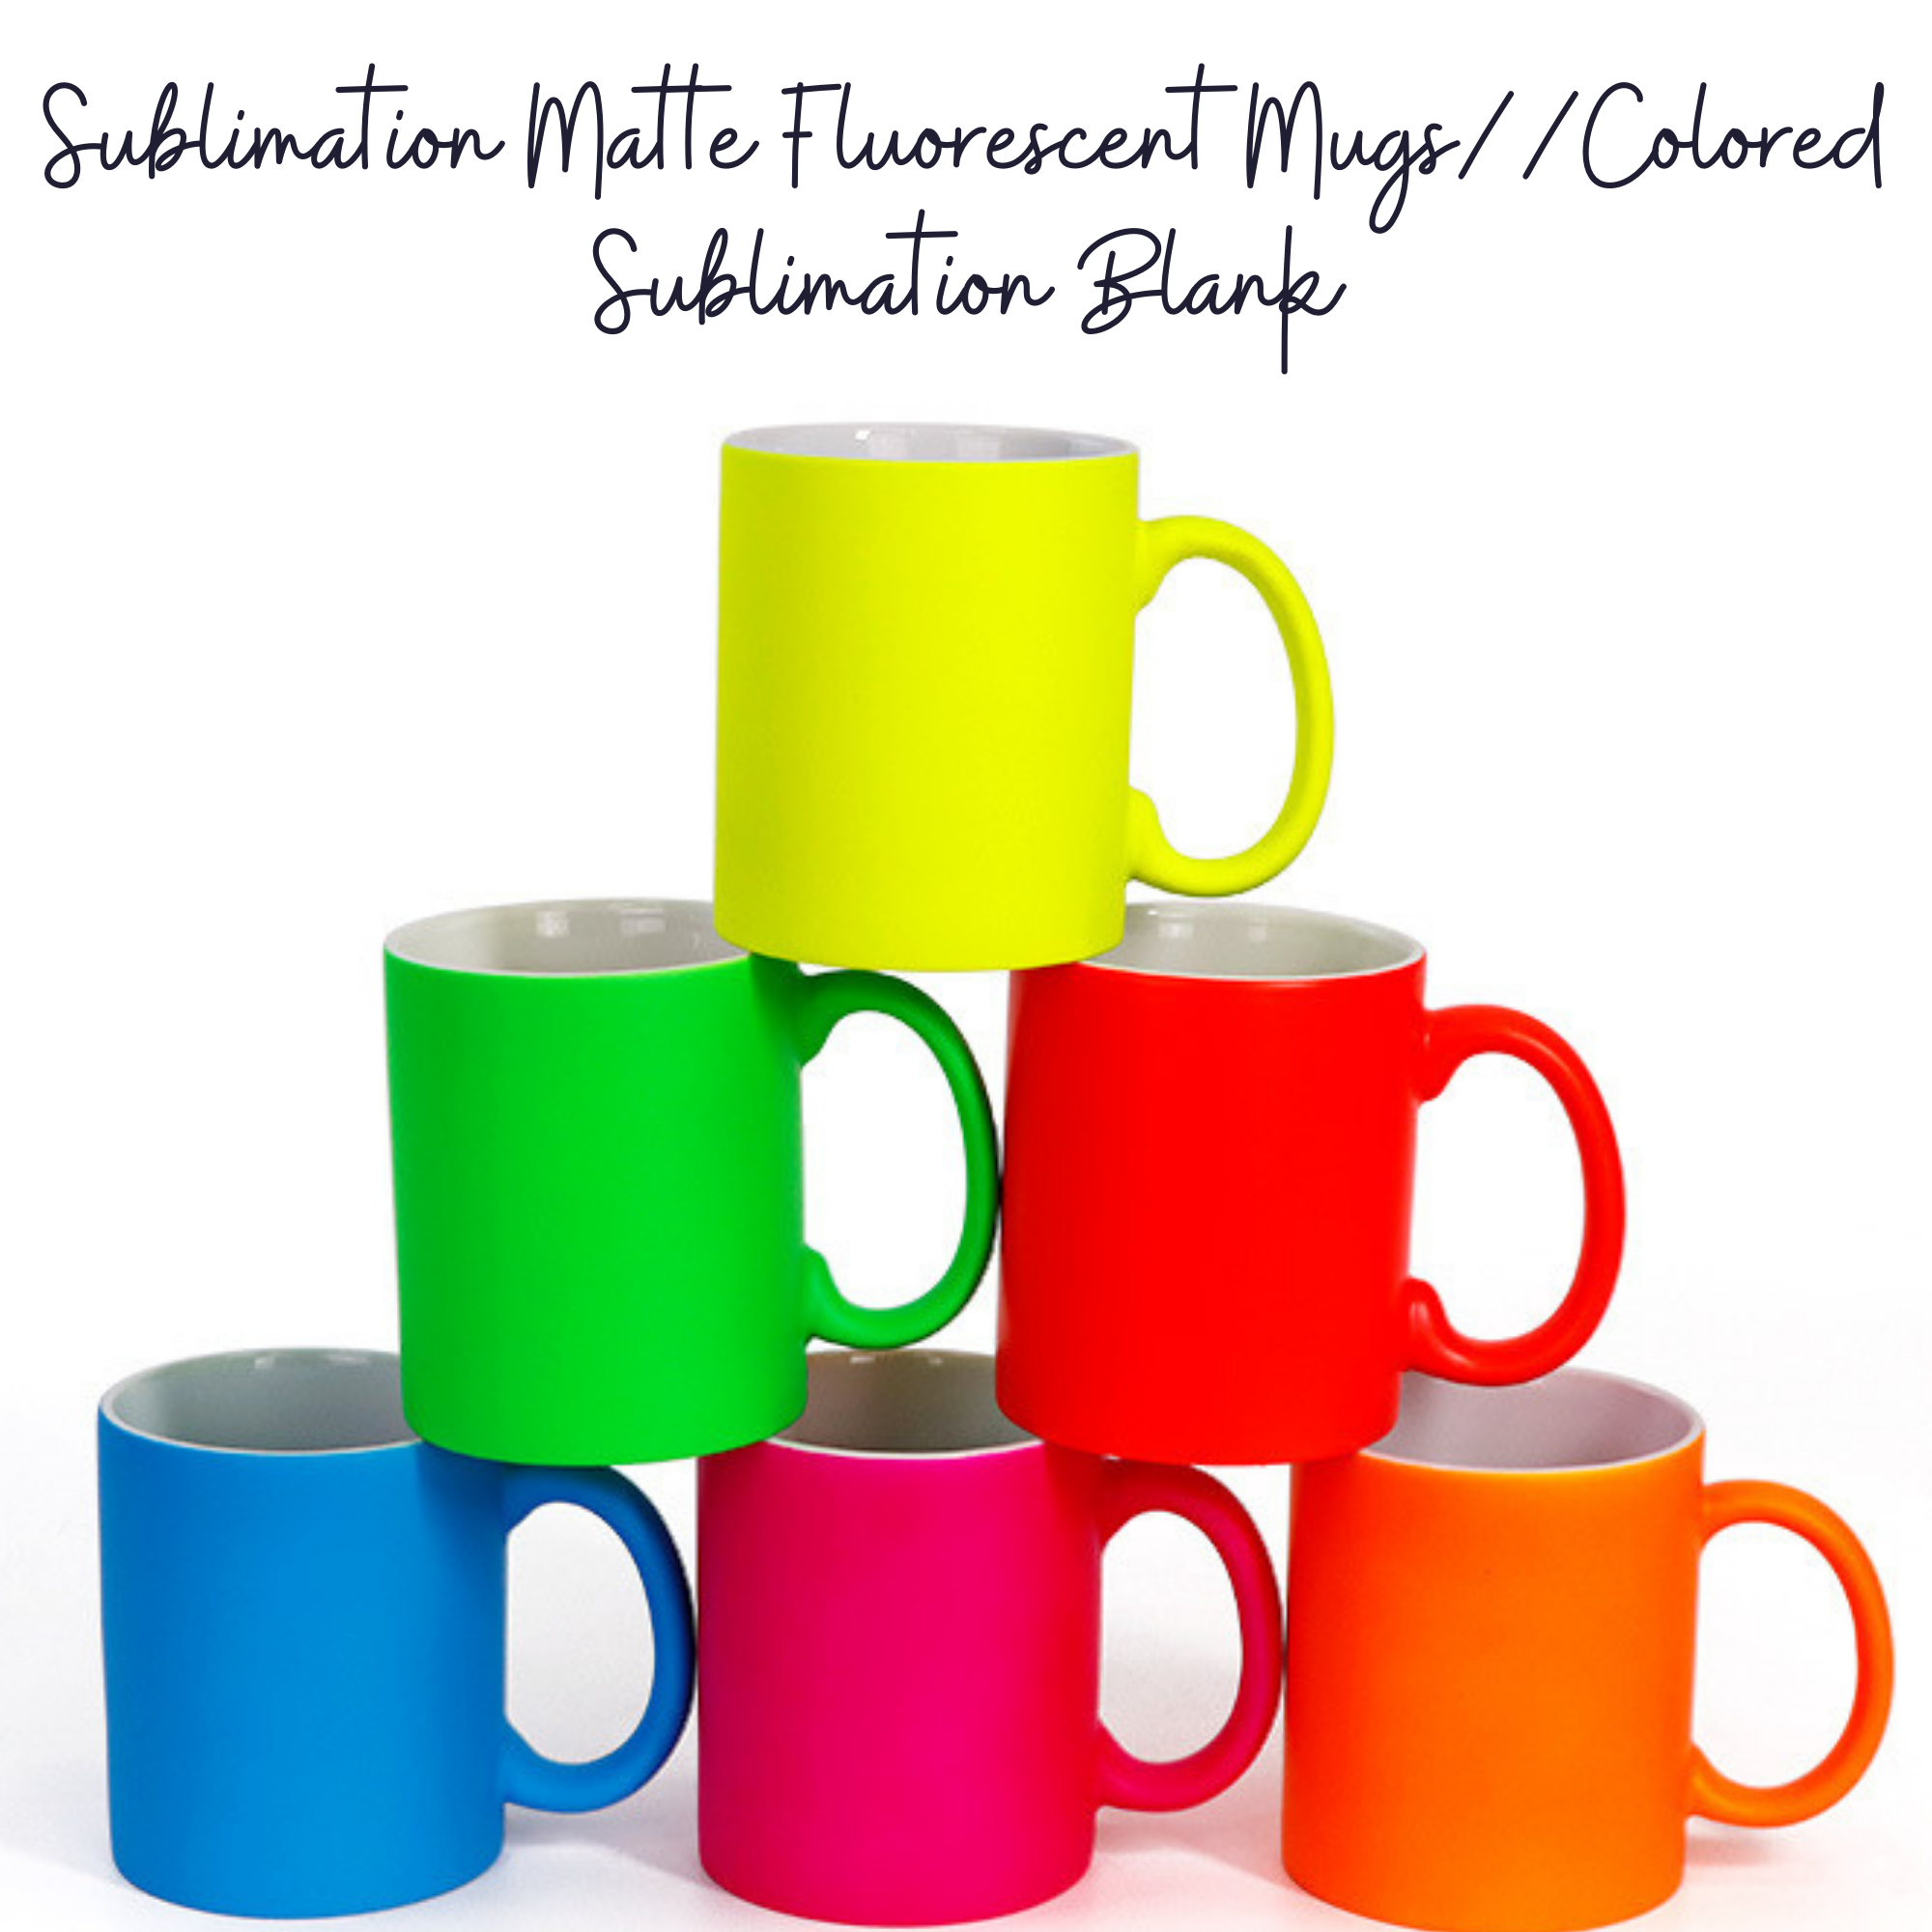 Sublimation Glitter Mugs - SassyDame Designs